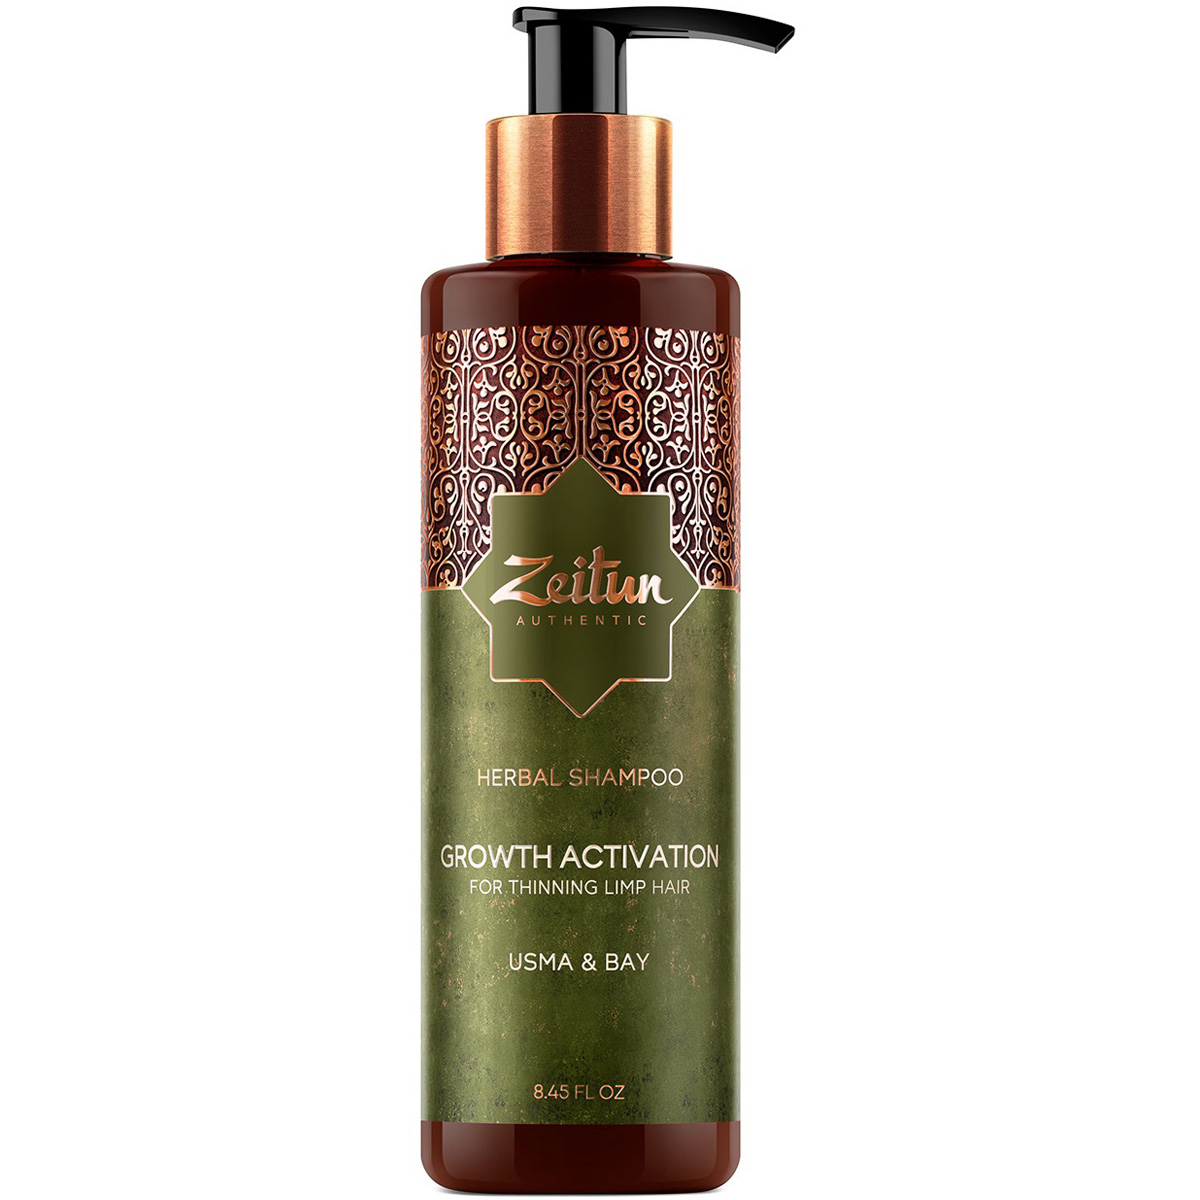 Zeitun Фито-шампунь с маслом усьмы для роста волос Growth Activation, 250 мл (Zeitun, Authentic)